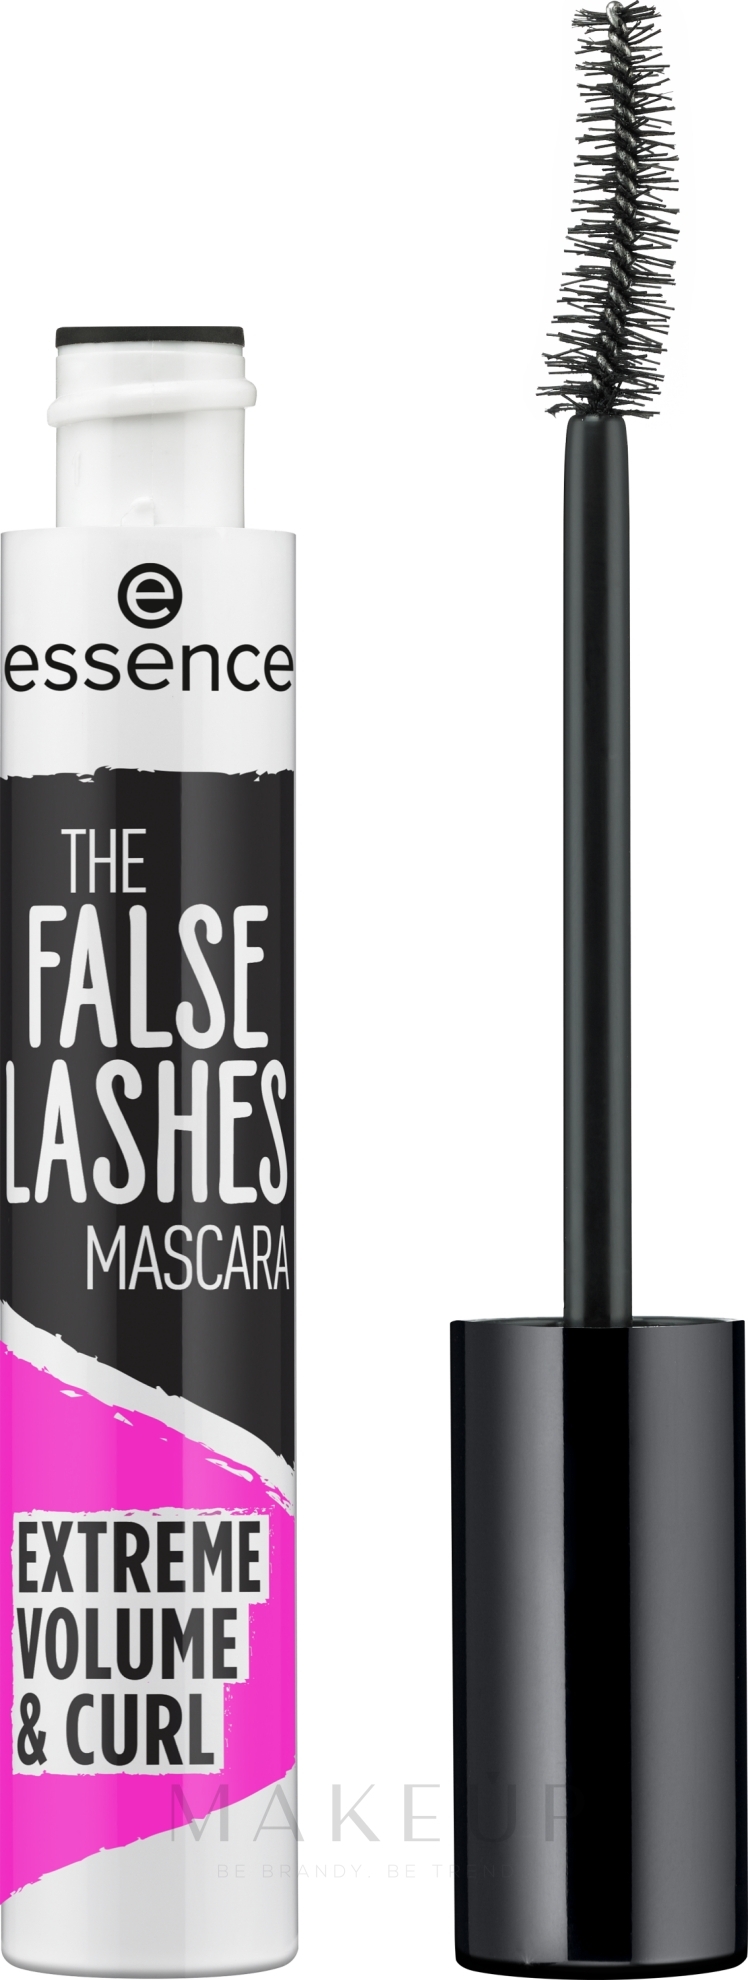 Mascara für geschwungene & voluminöse Wimpern - Essence The False Lashes Mascara Extreme Volume & Curl — Foto Black